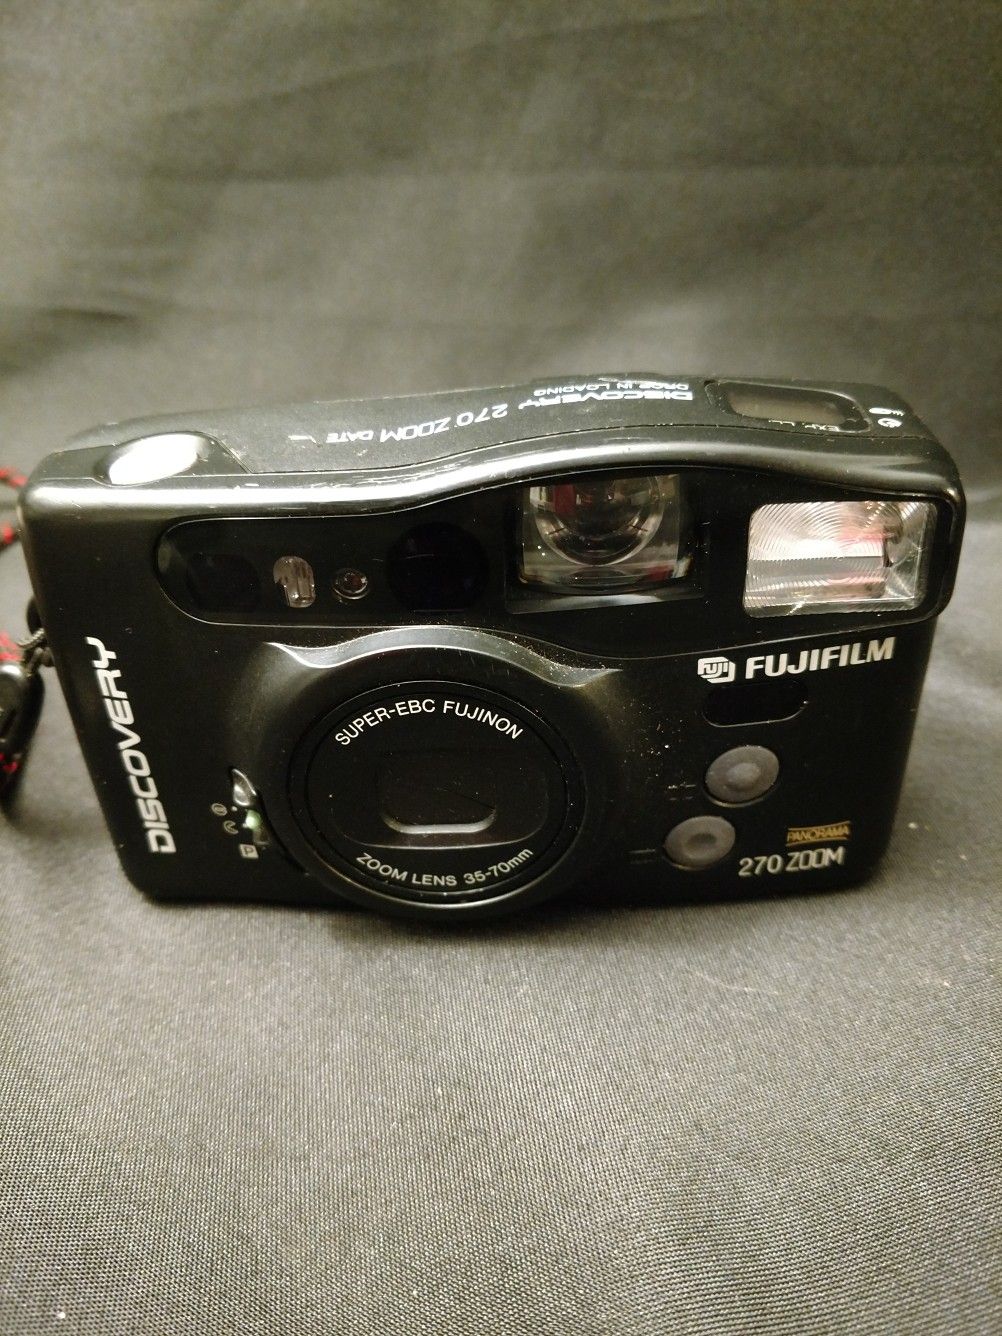 Fujifilm camera